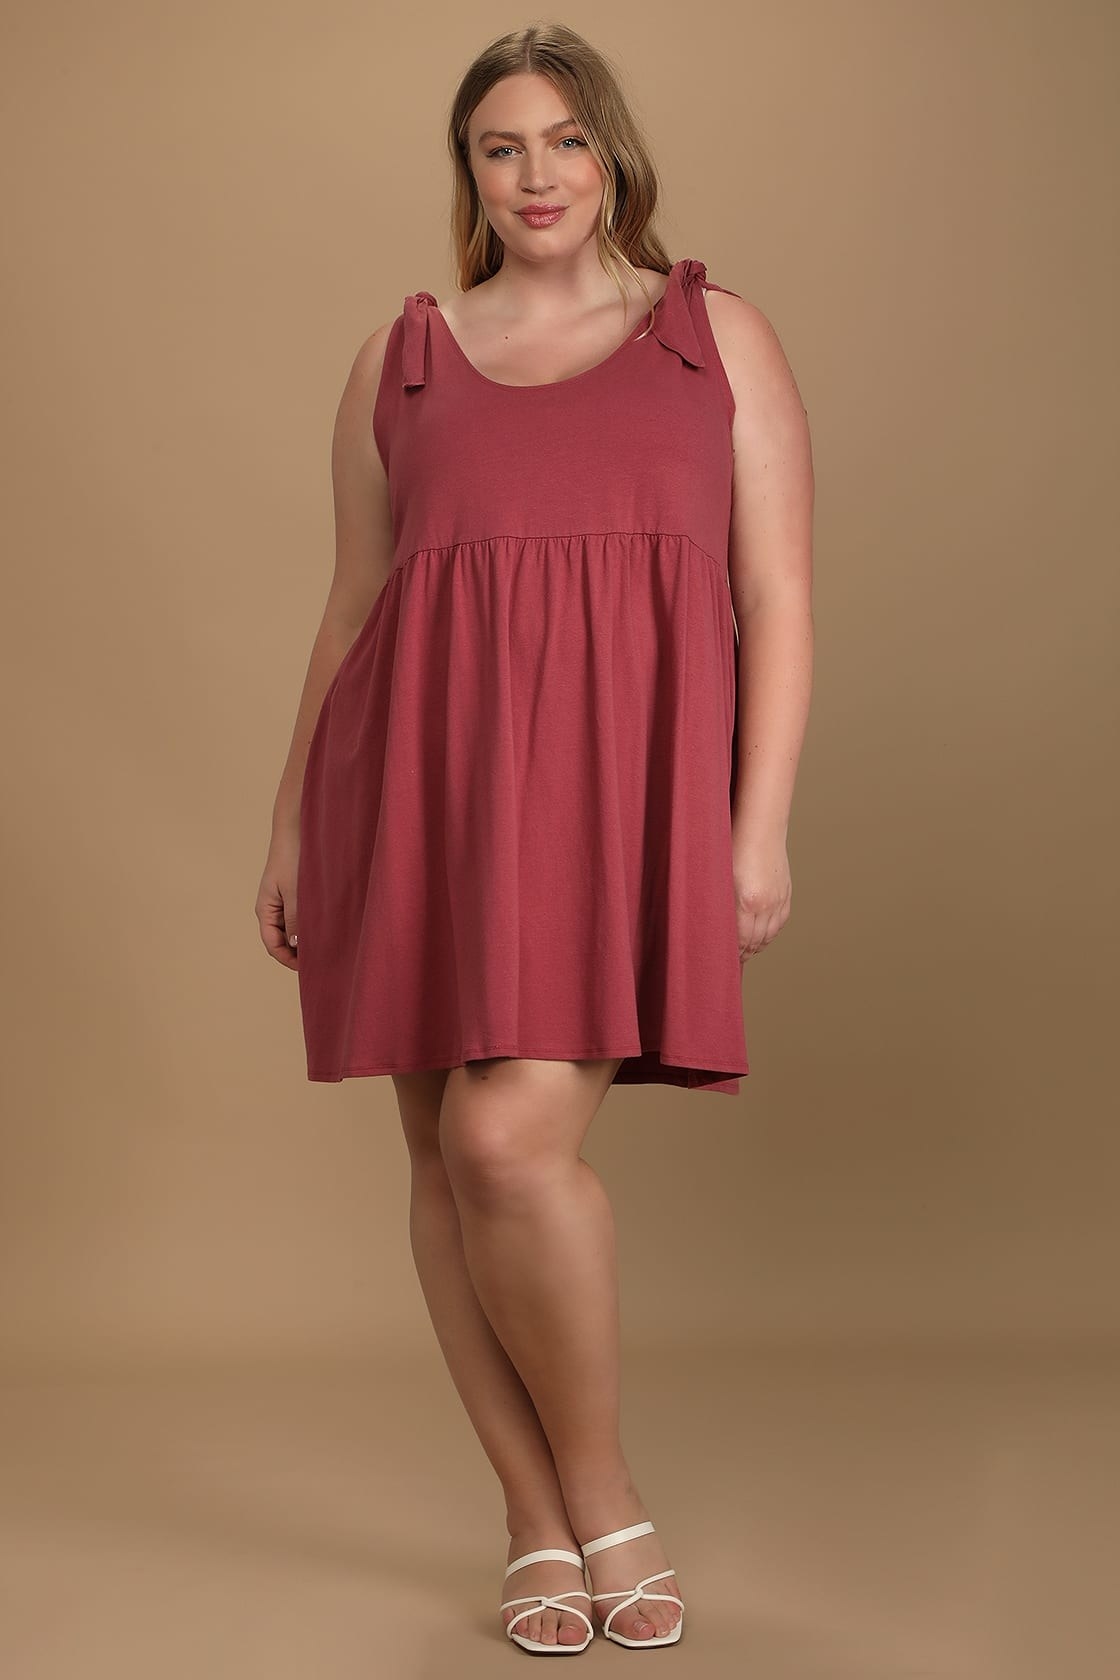 Model wearing burgundy babydoll dress